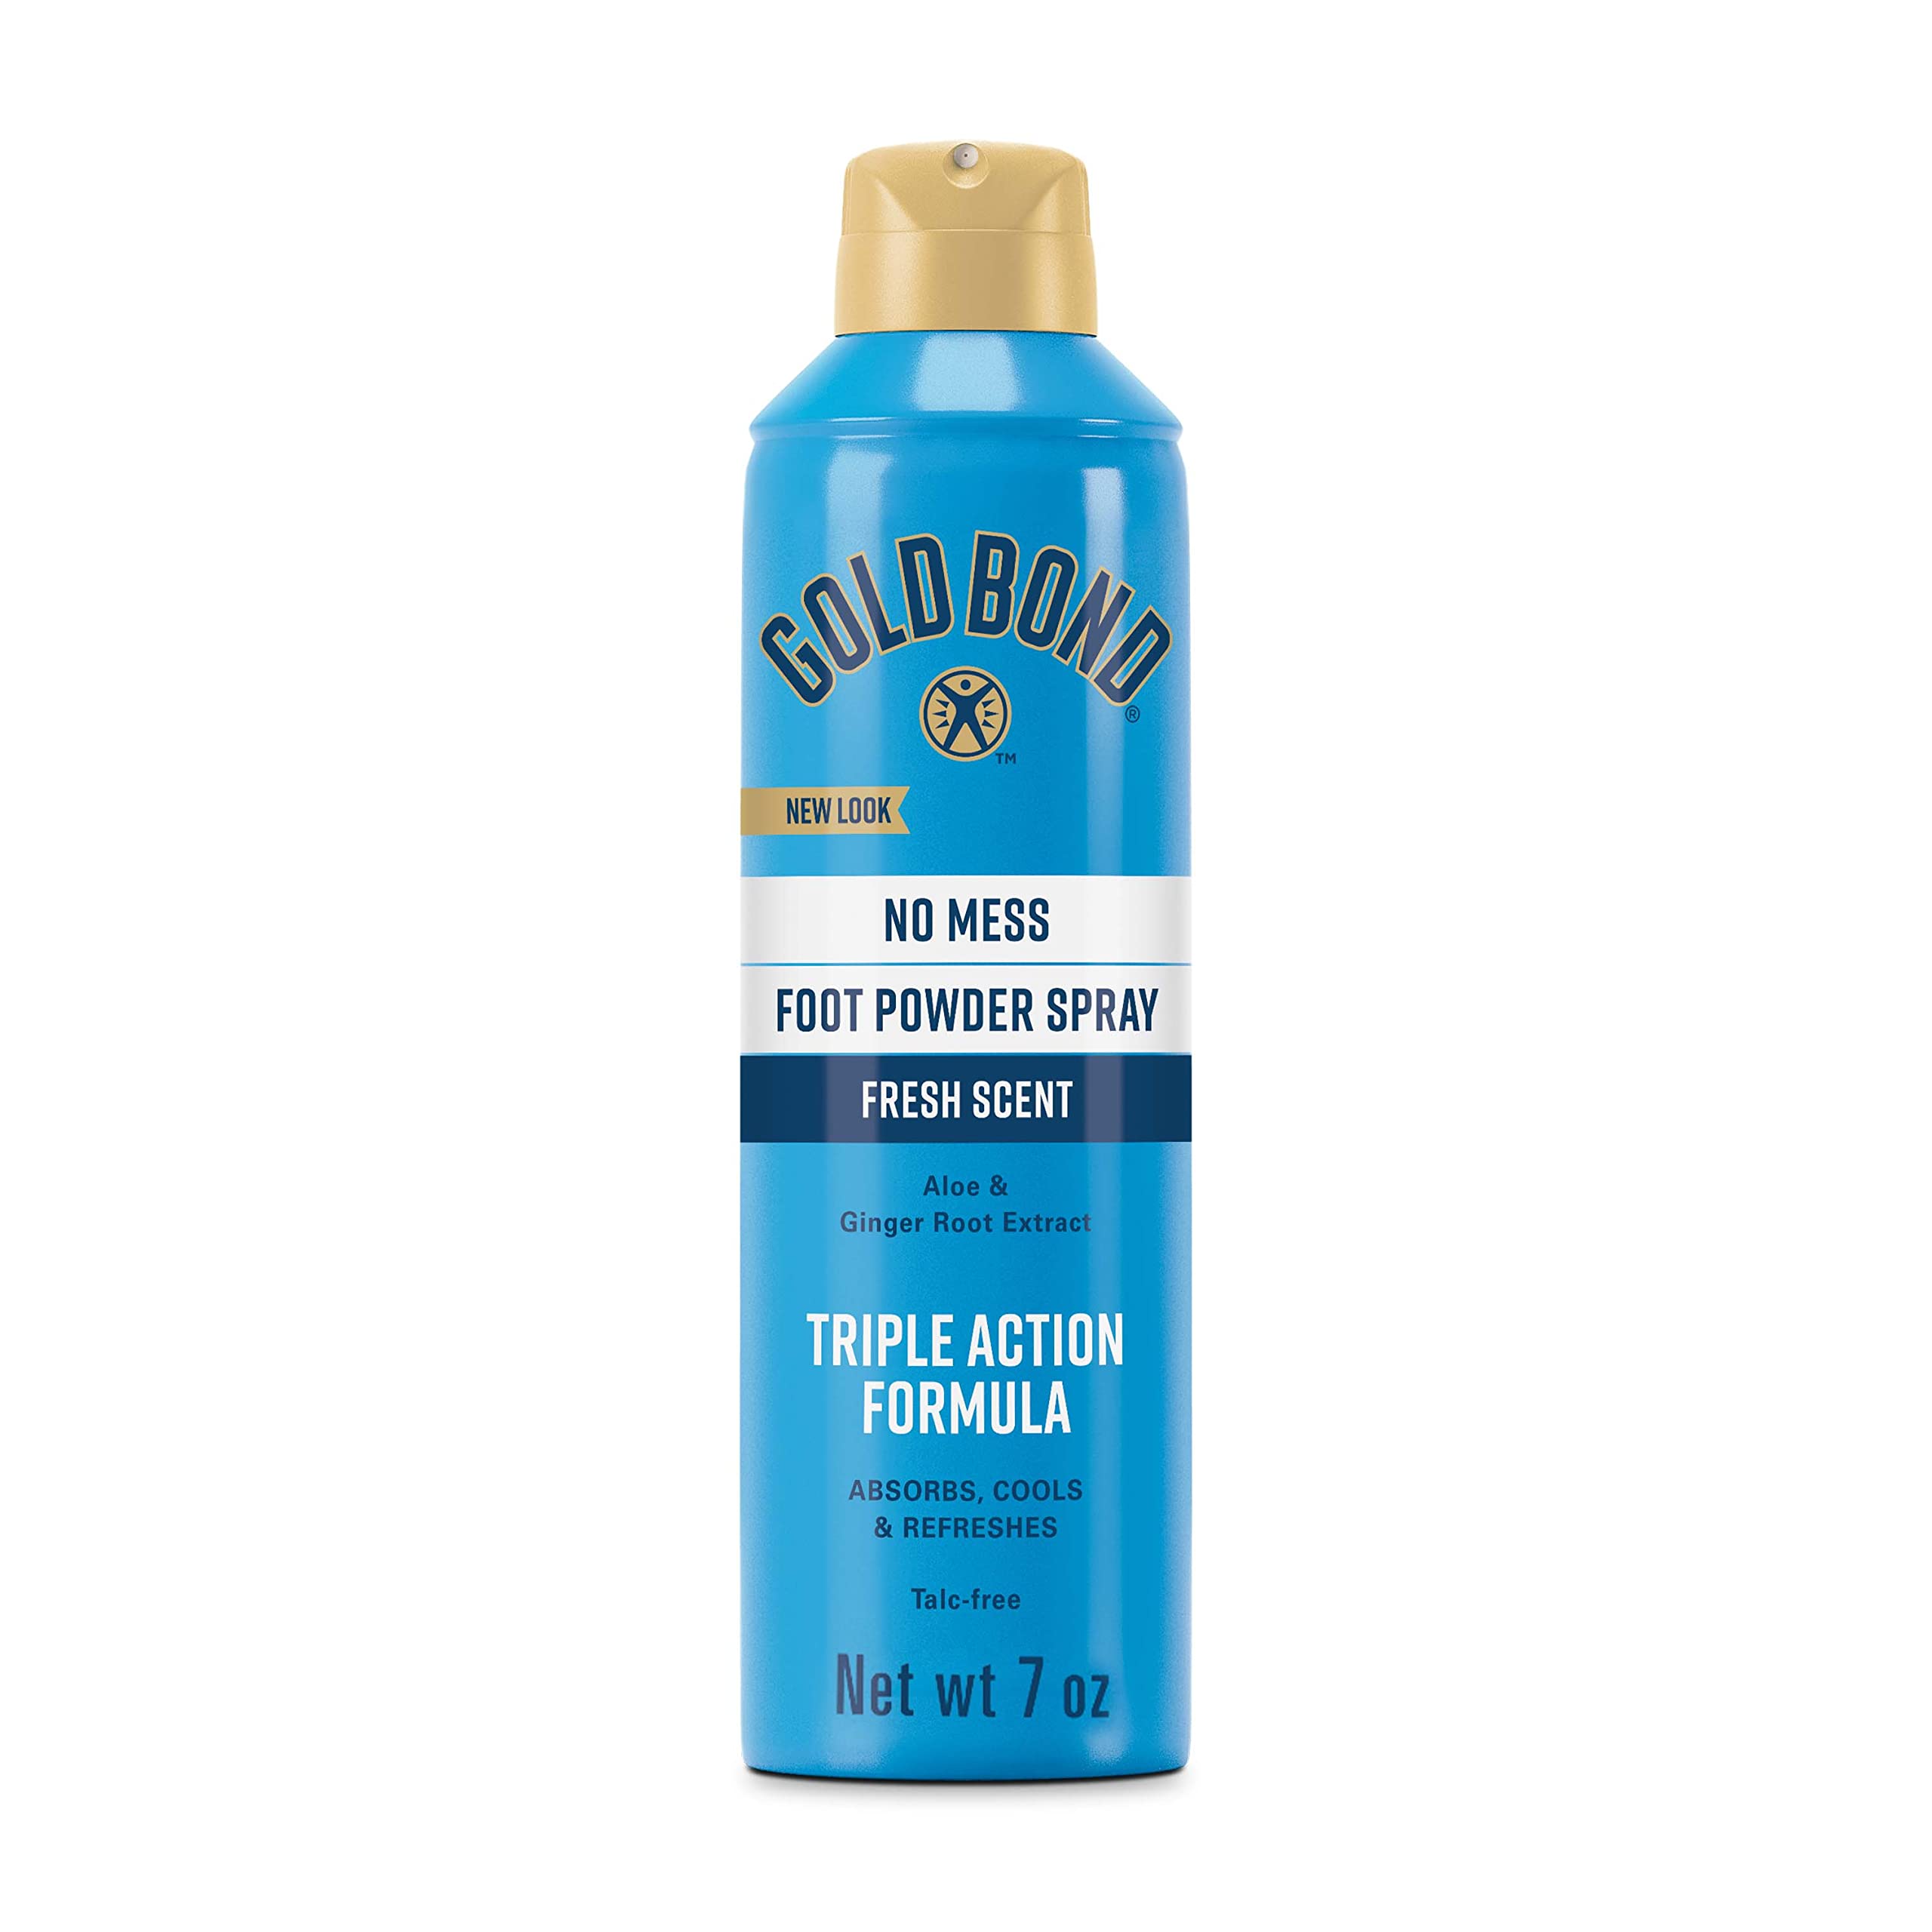 Gold Bond No Mess Talc-Free Foot Powder Spray, 7 oz., Fresh Scent, With a Triple Action Formula